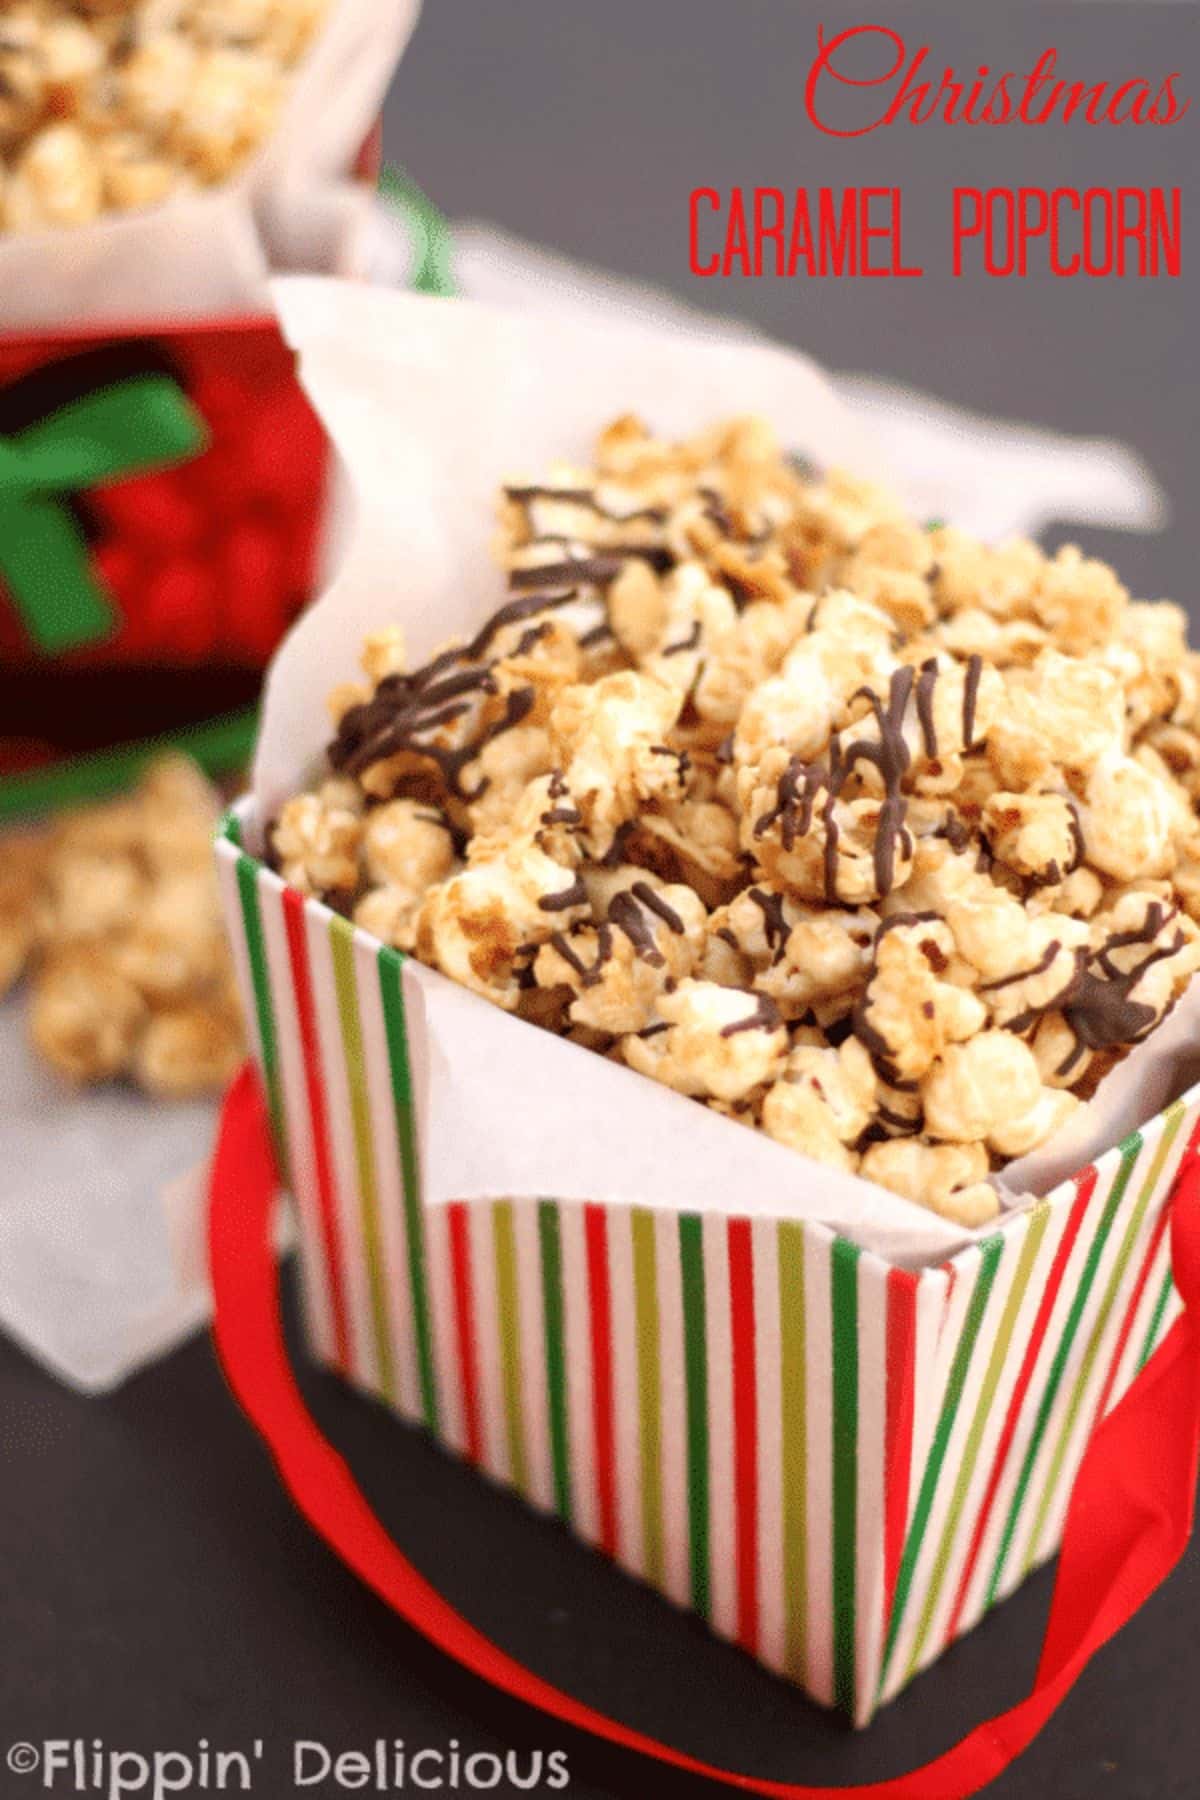 Crunchy Christmas Caramel Popcorn in a paper bag.